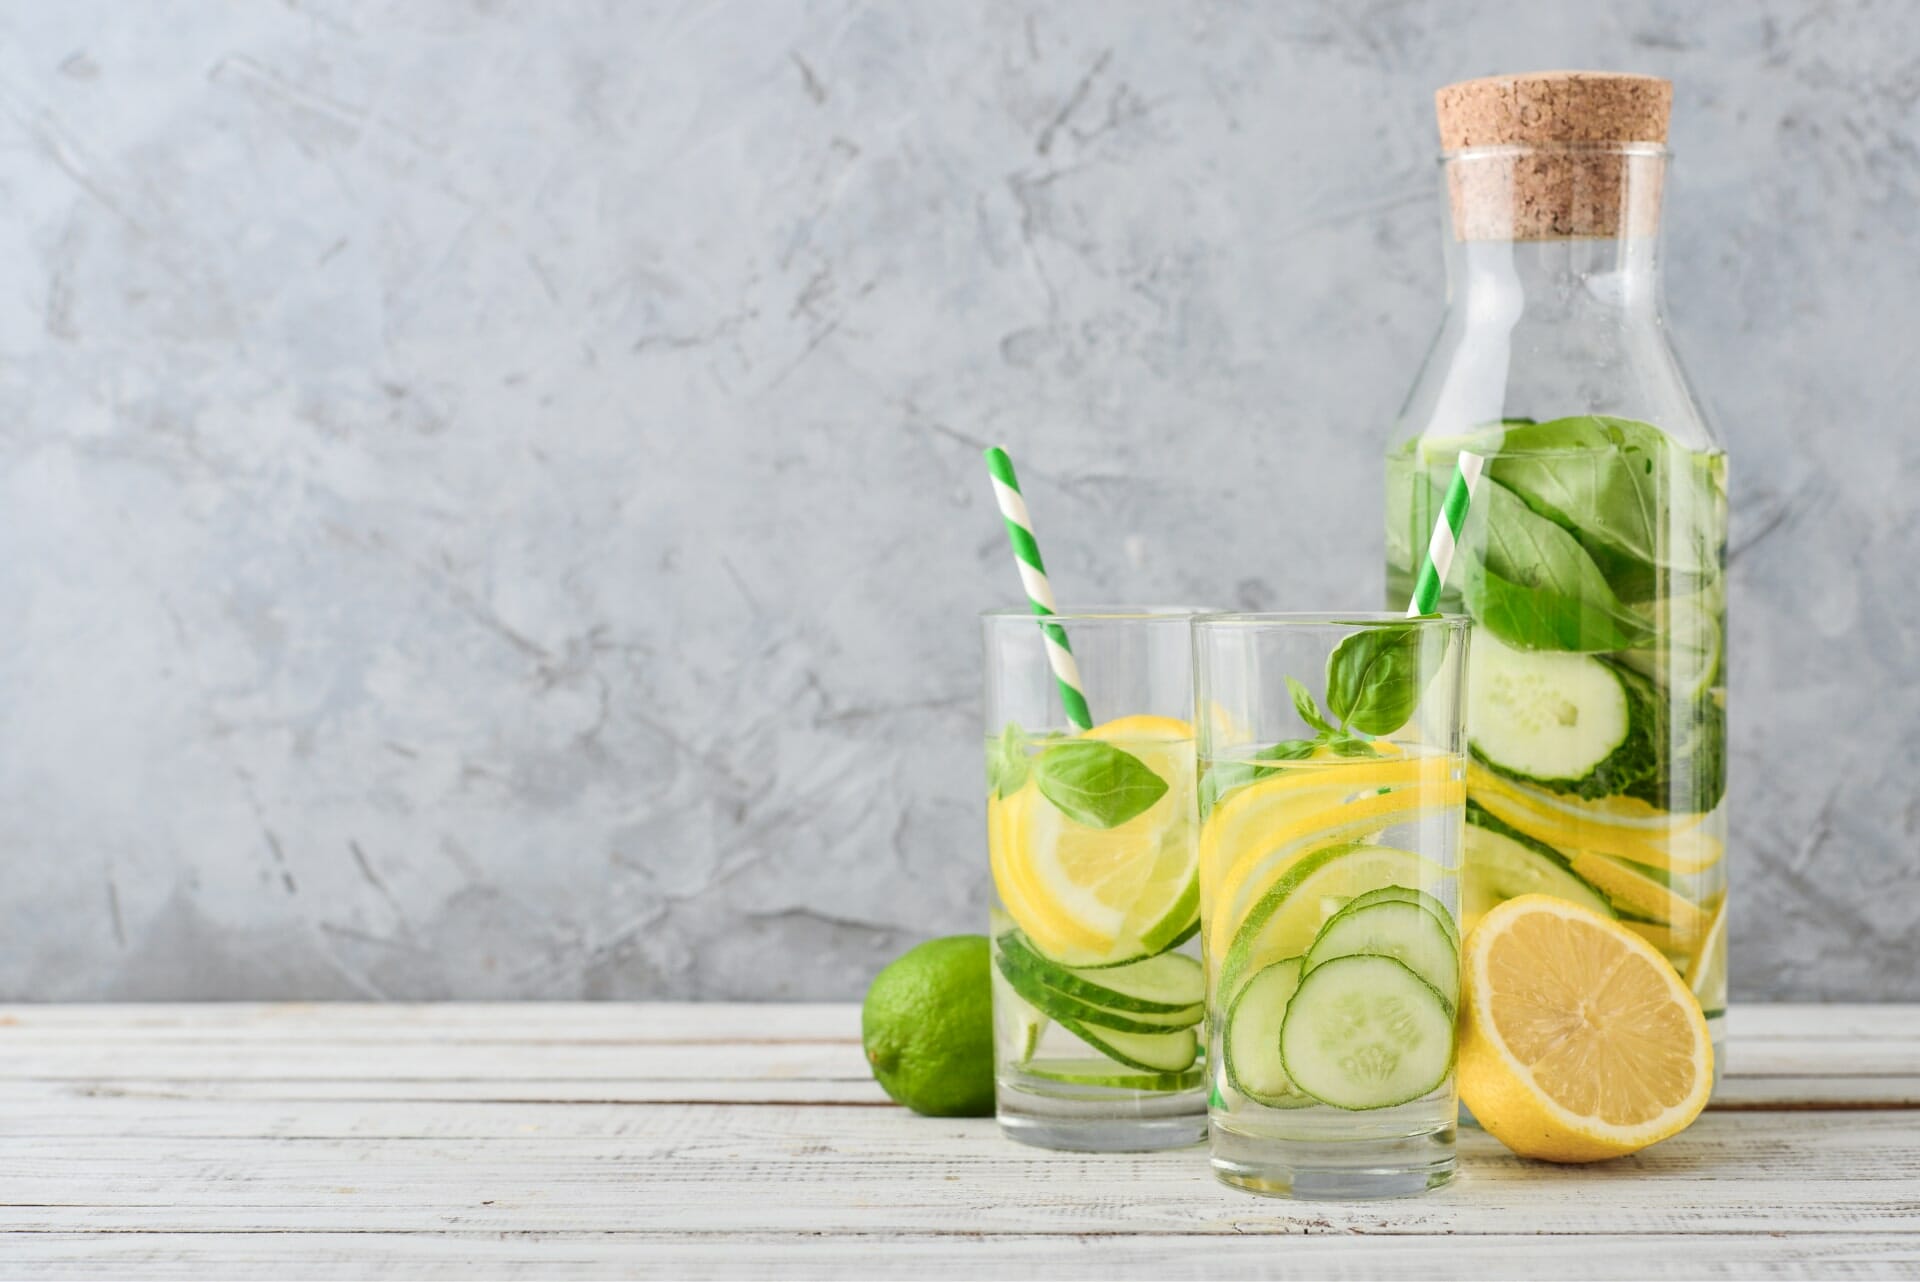 Lemon Water – An incredible natural way to detox